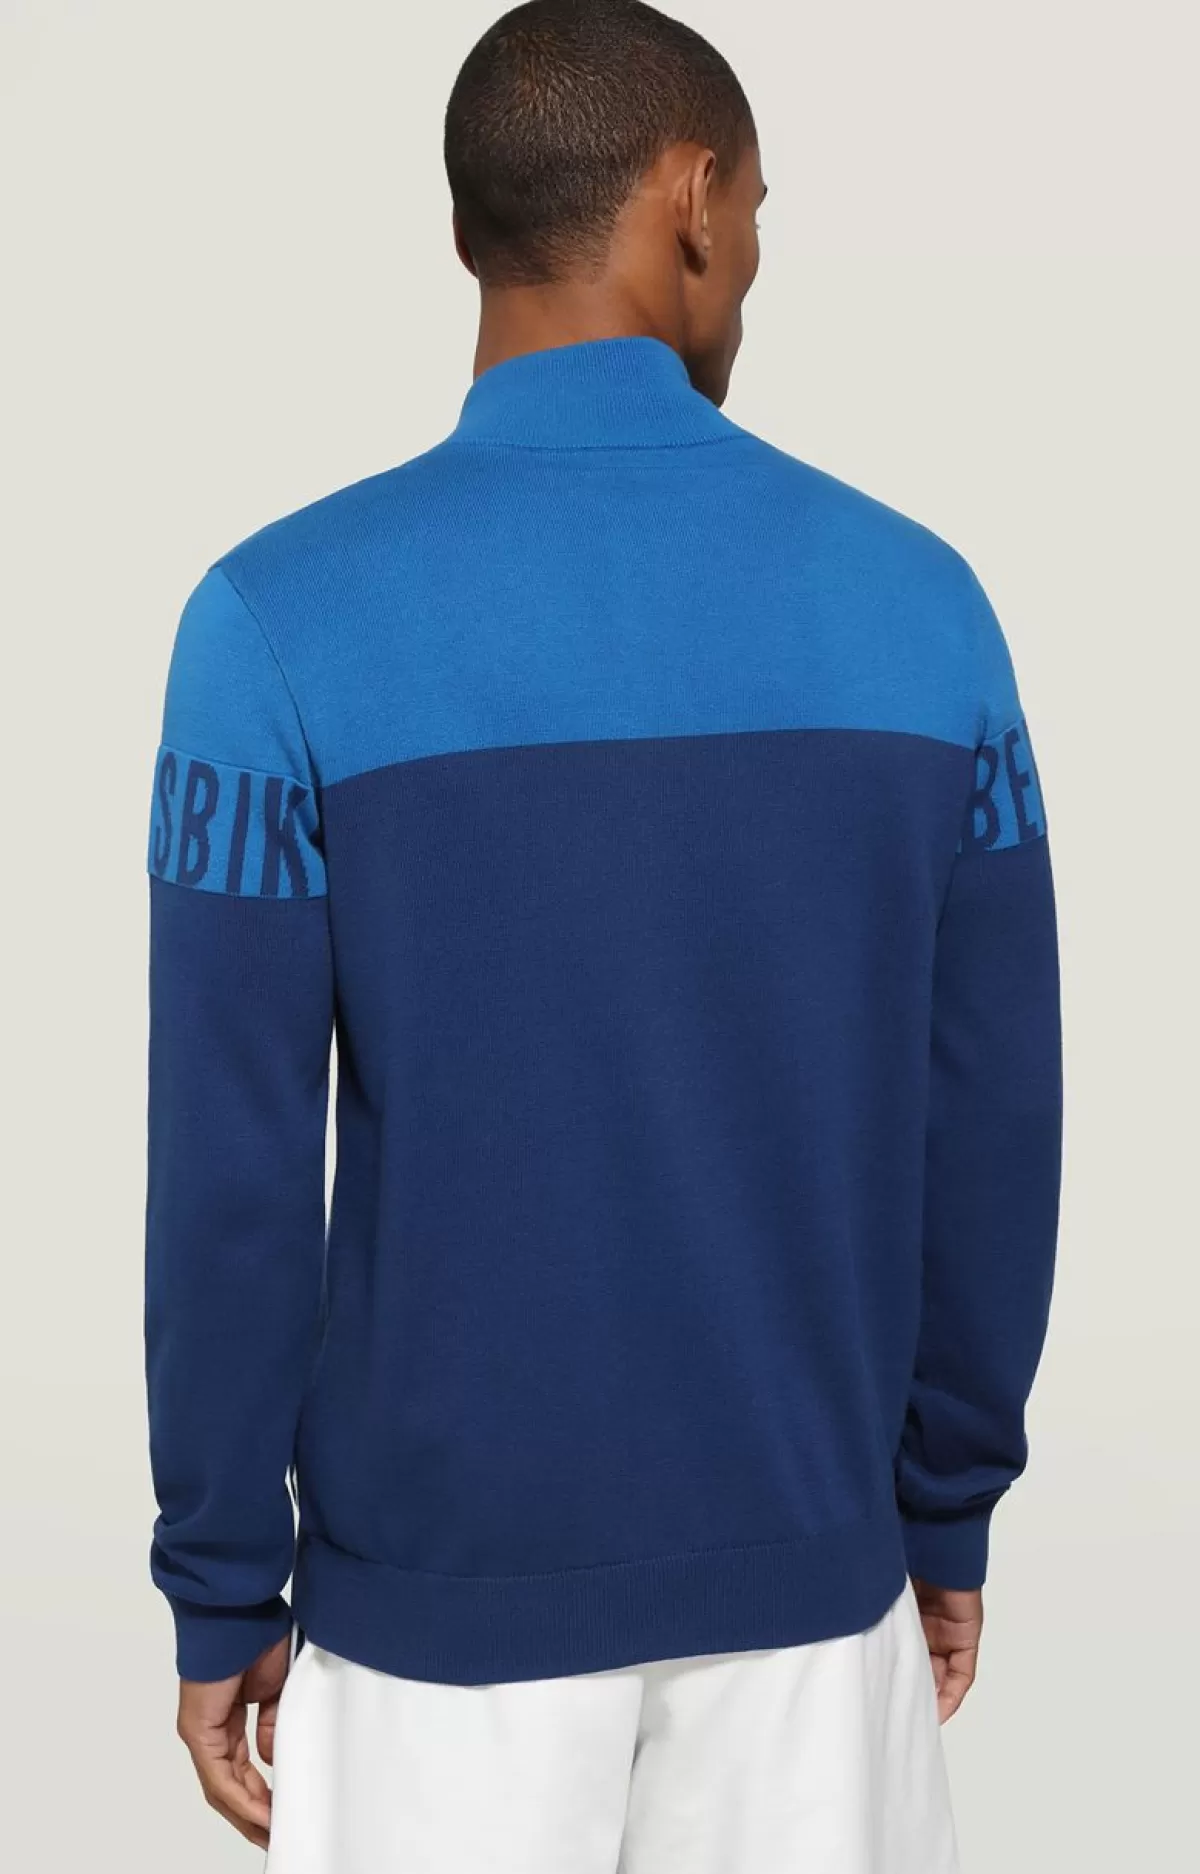 Bikkembergs Men'S Knit Jacket With Zip Blue/Snorkel Online